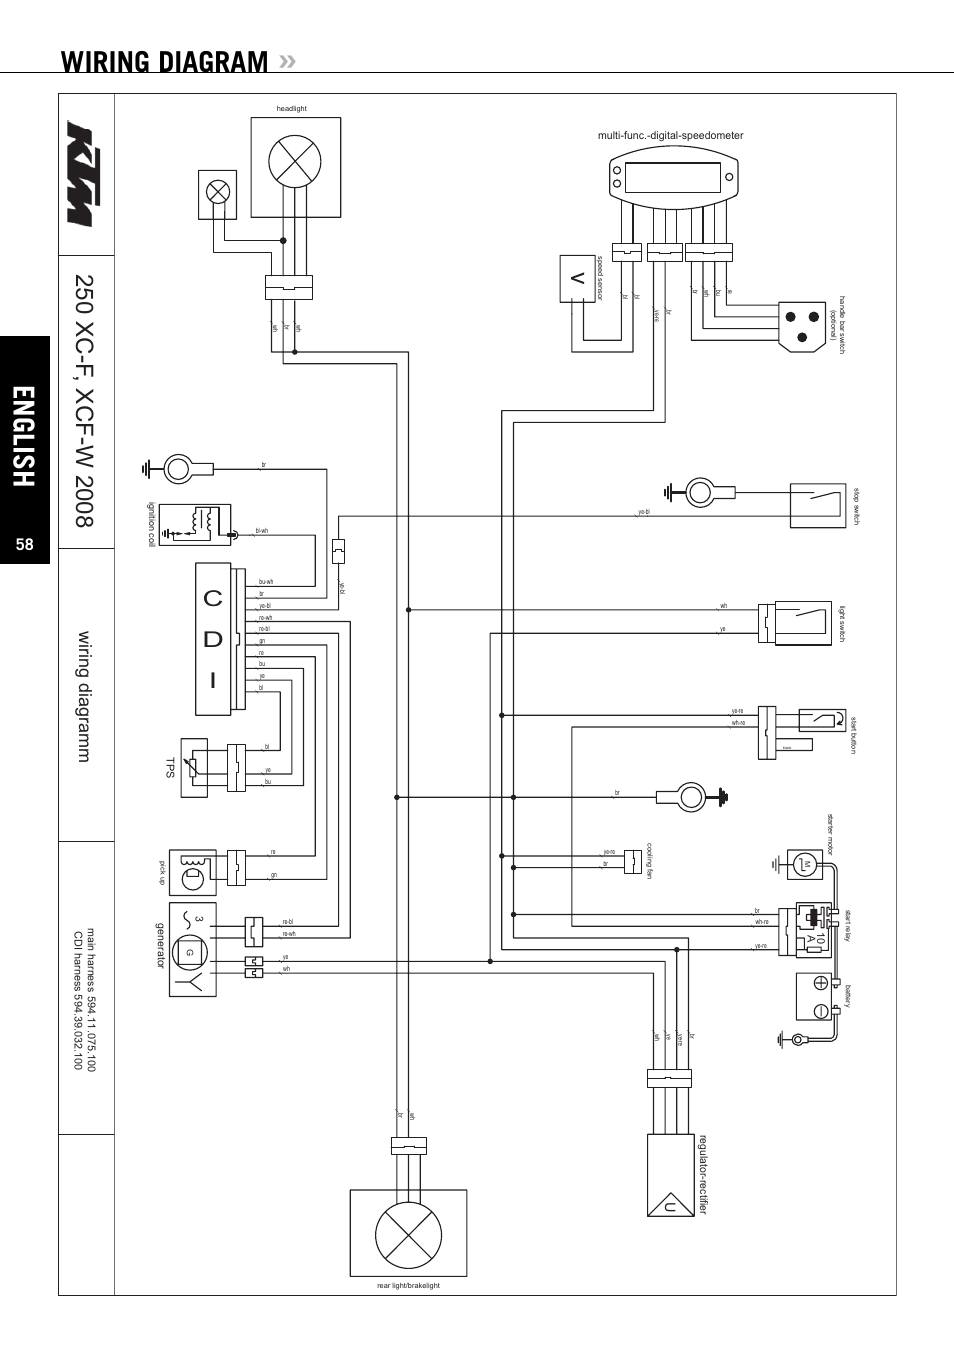 Ign Wiring Diagram 2003 Hyundai Elantra from www.manualsdir.com